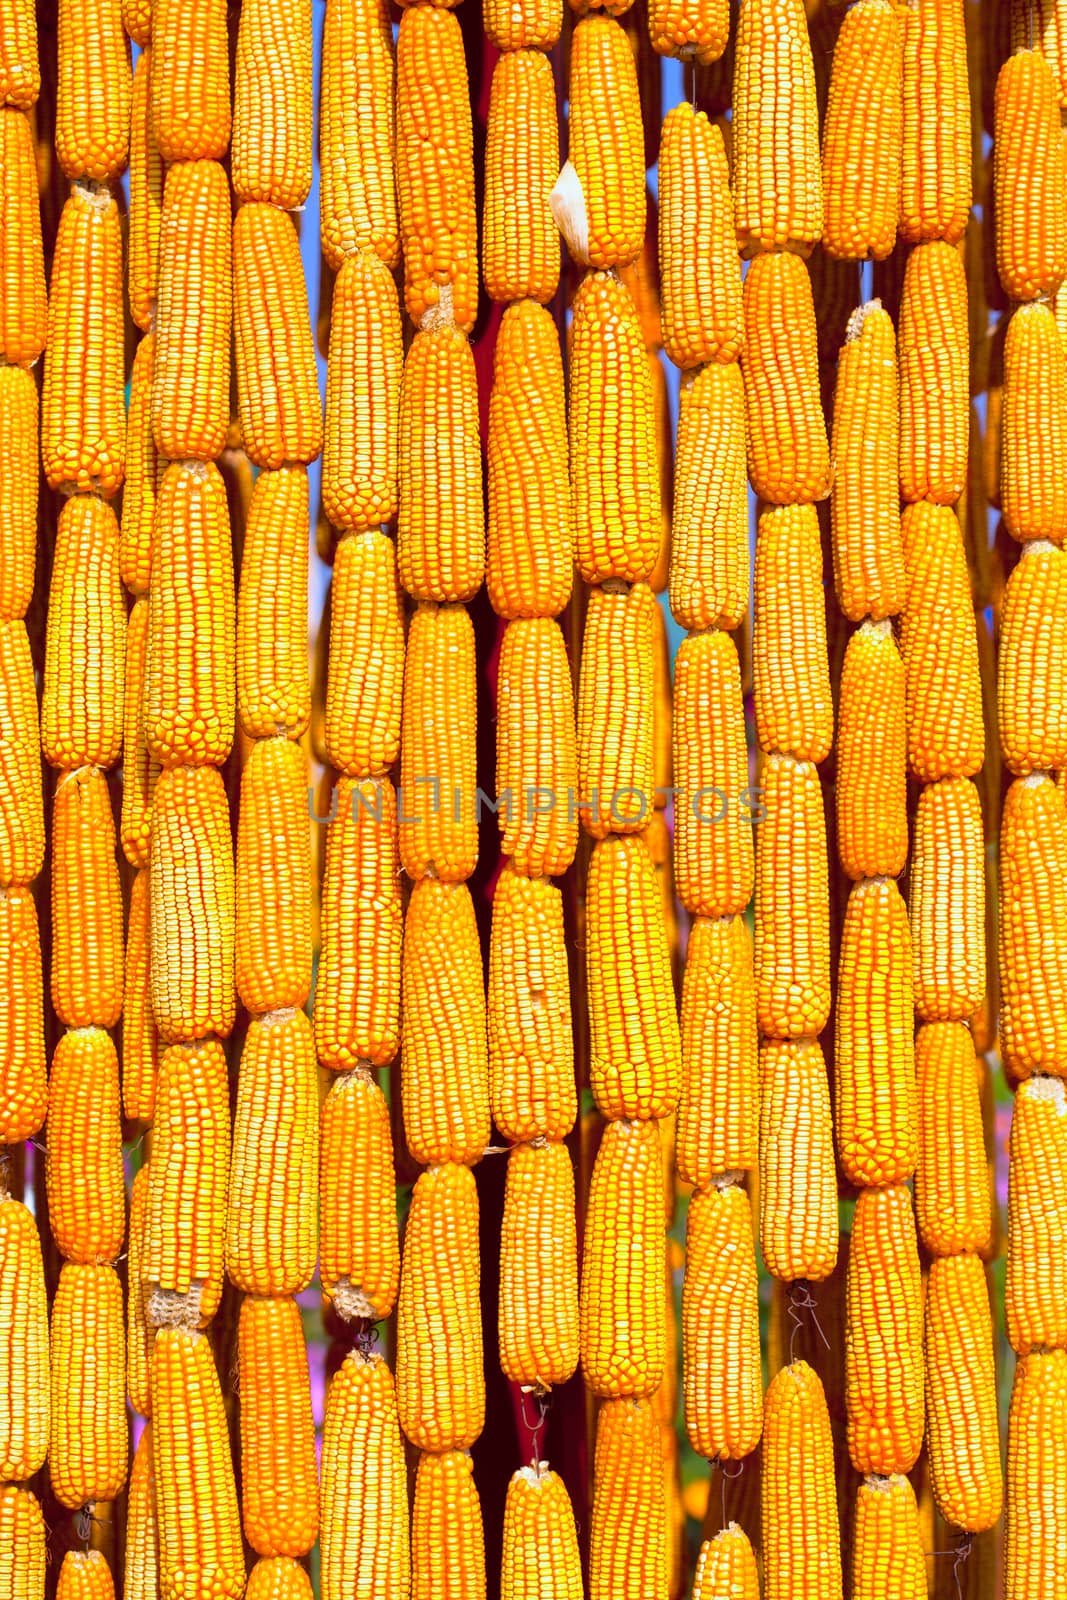 Corn Craft,Outdoor exhibit The blue set here